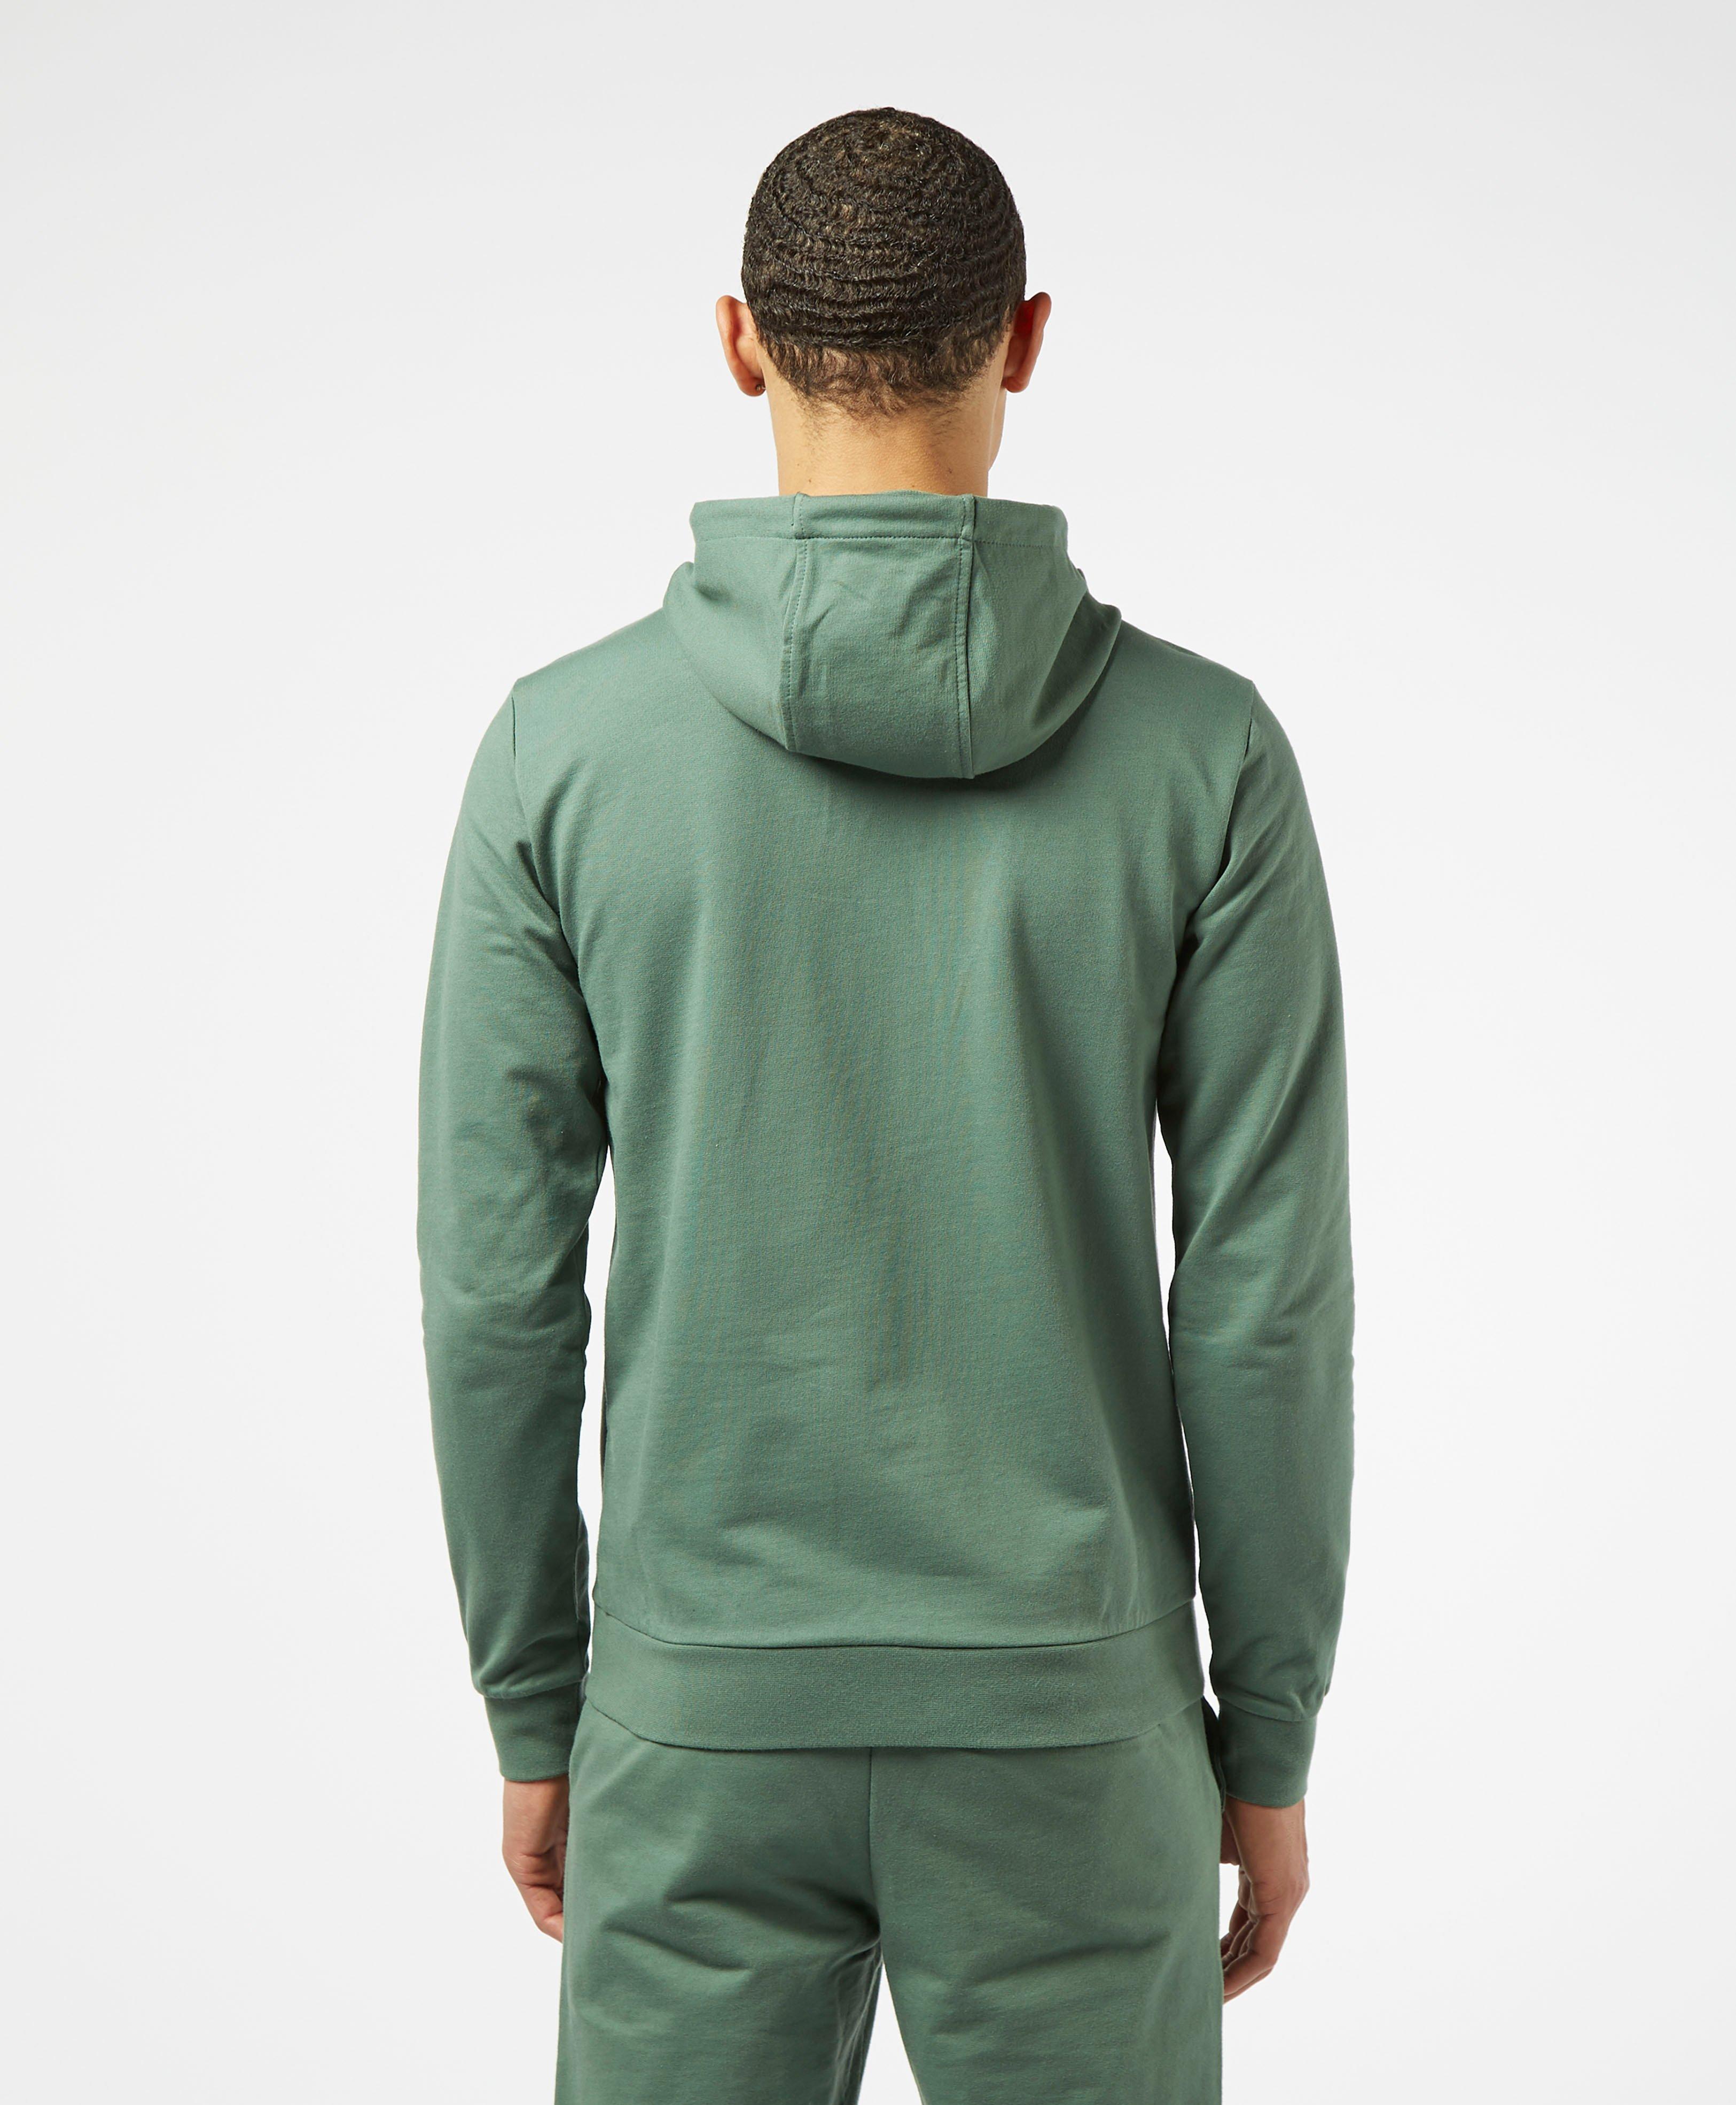 green armani hoodie